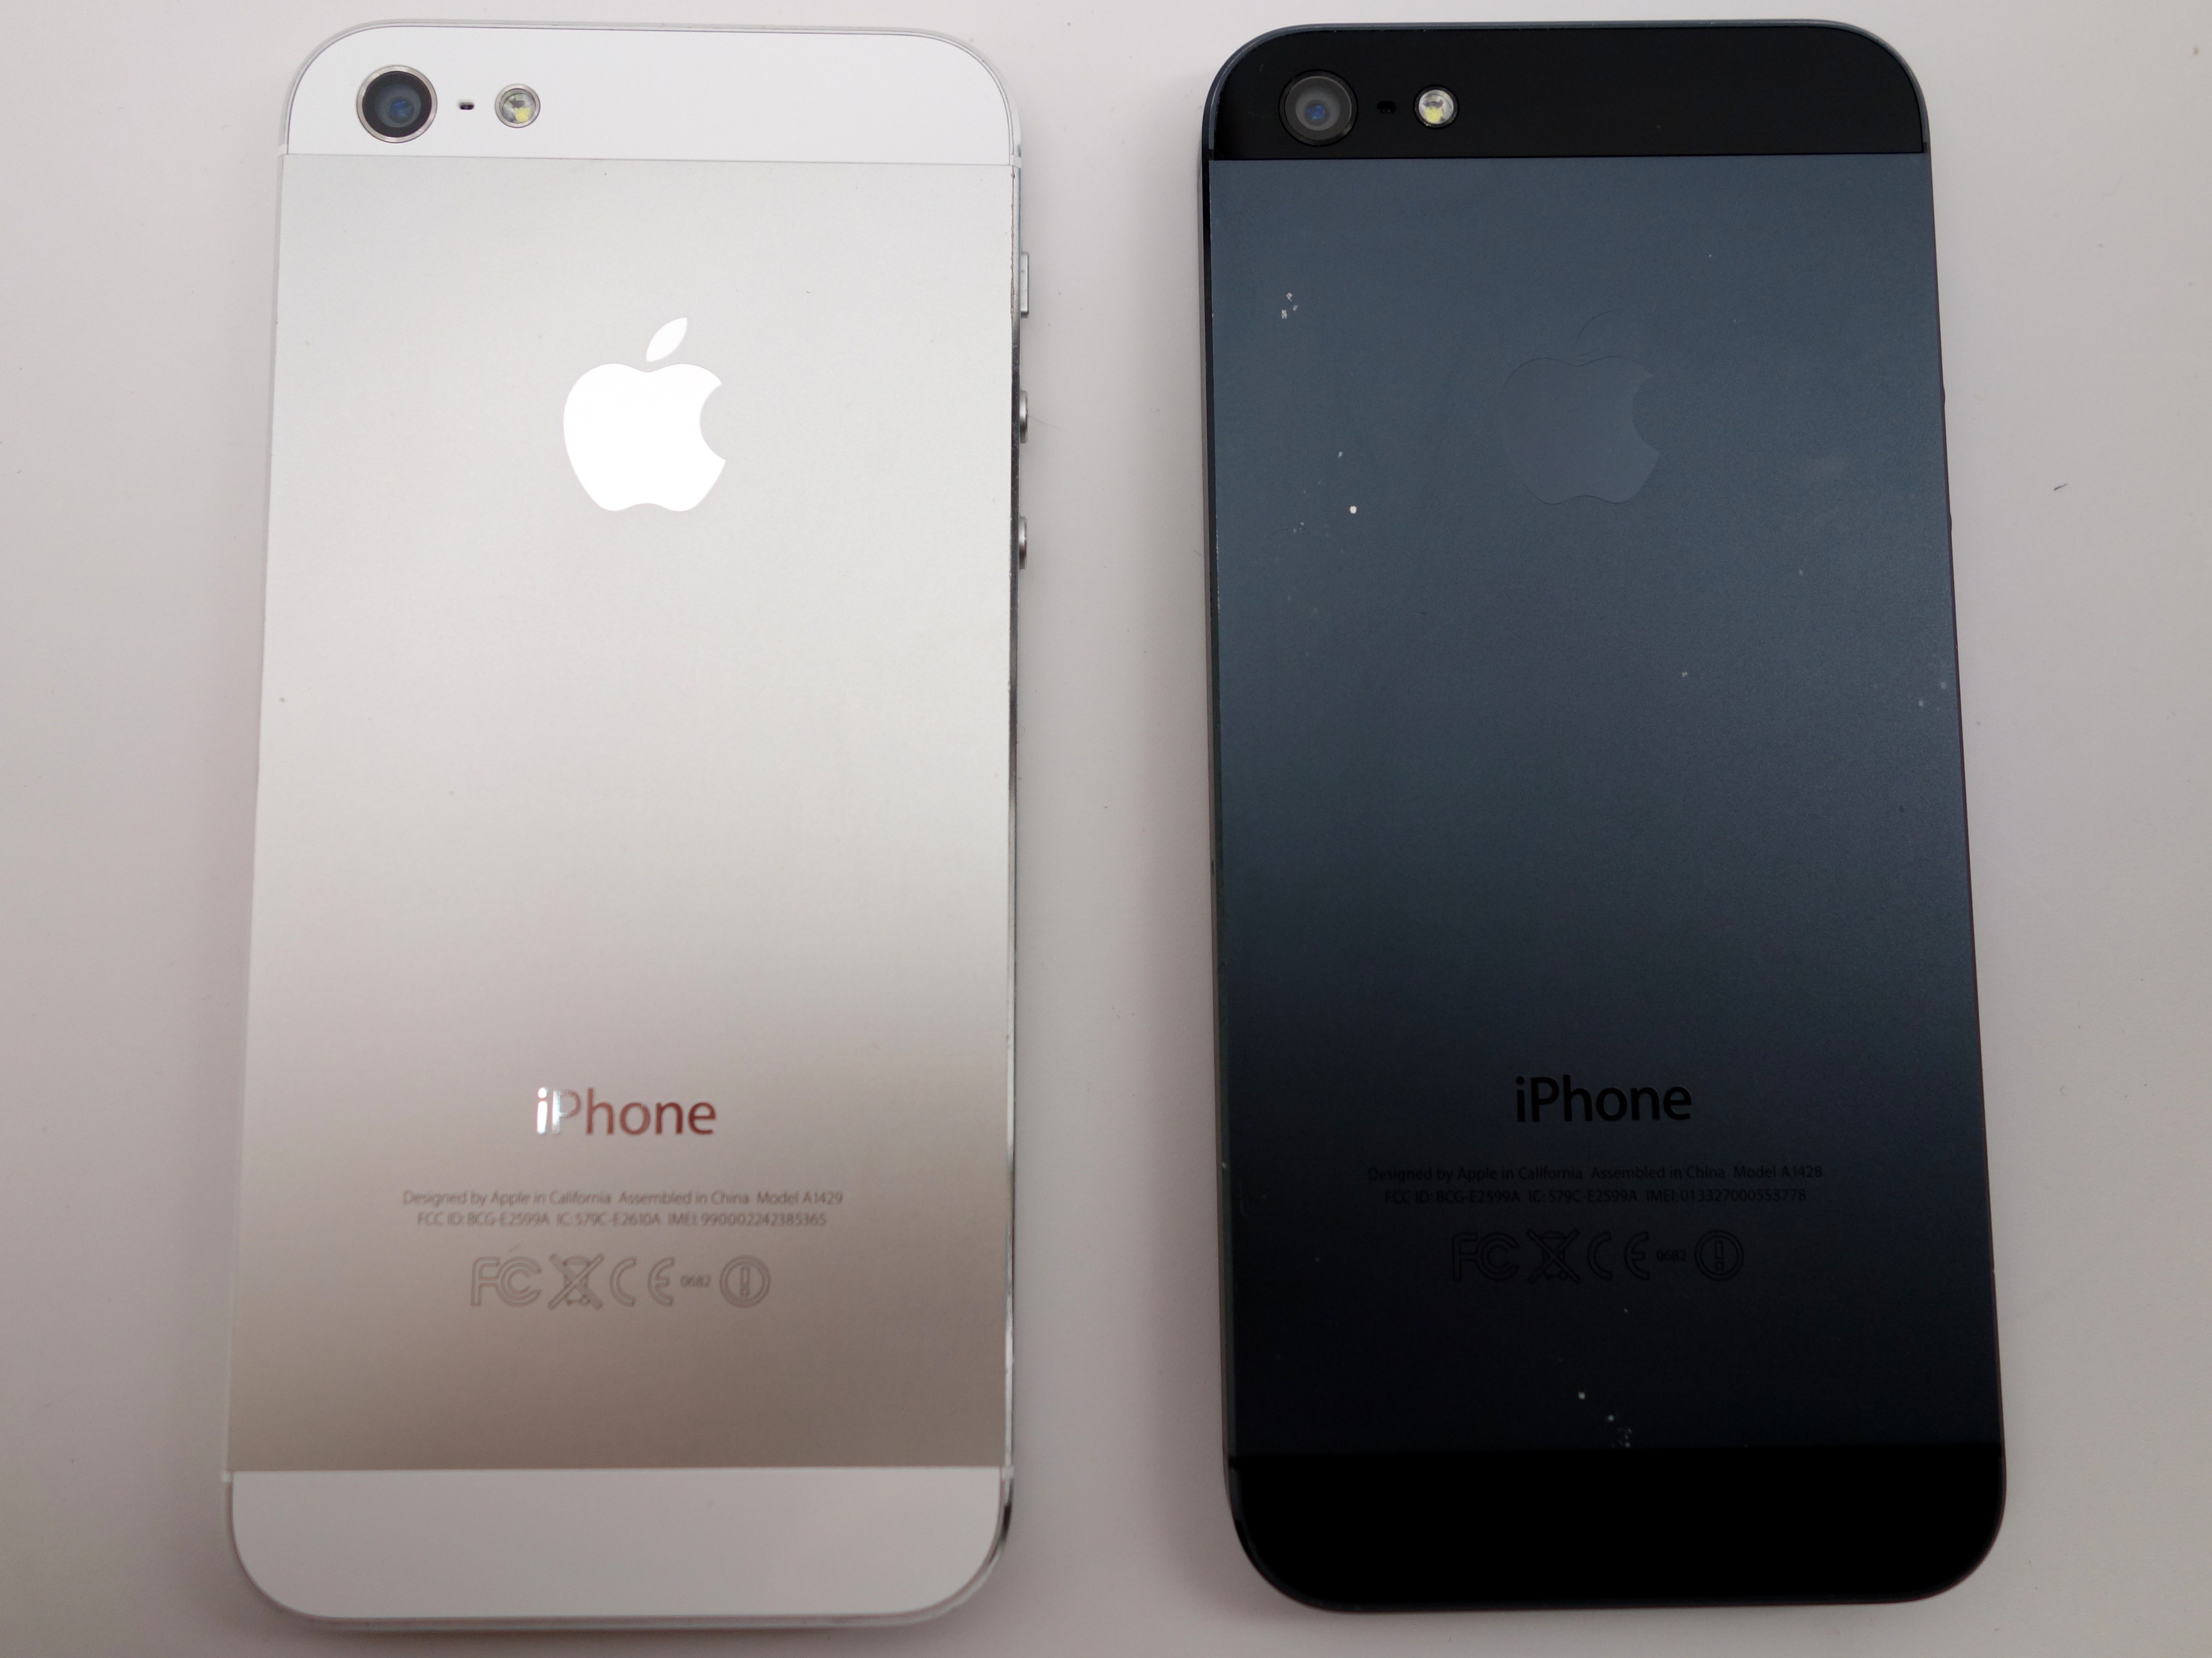 iPhone 5: Black vs White